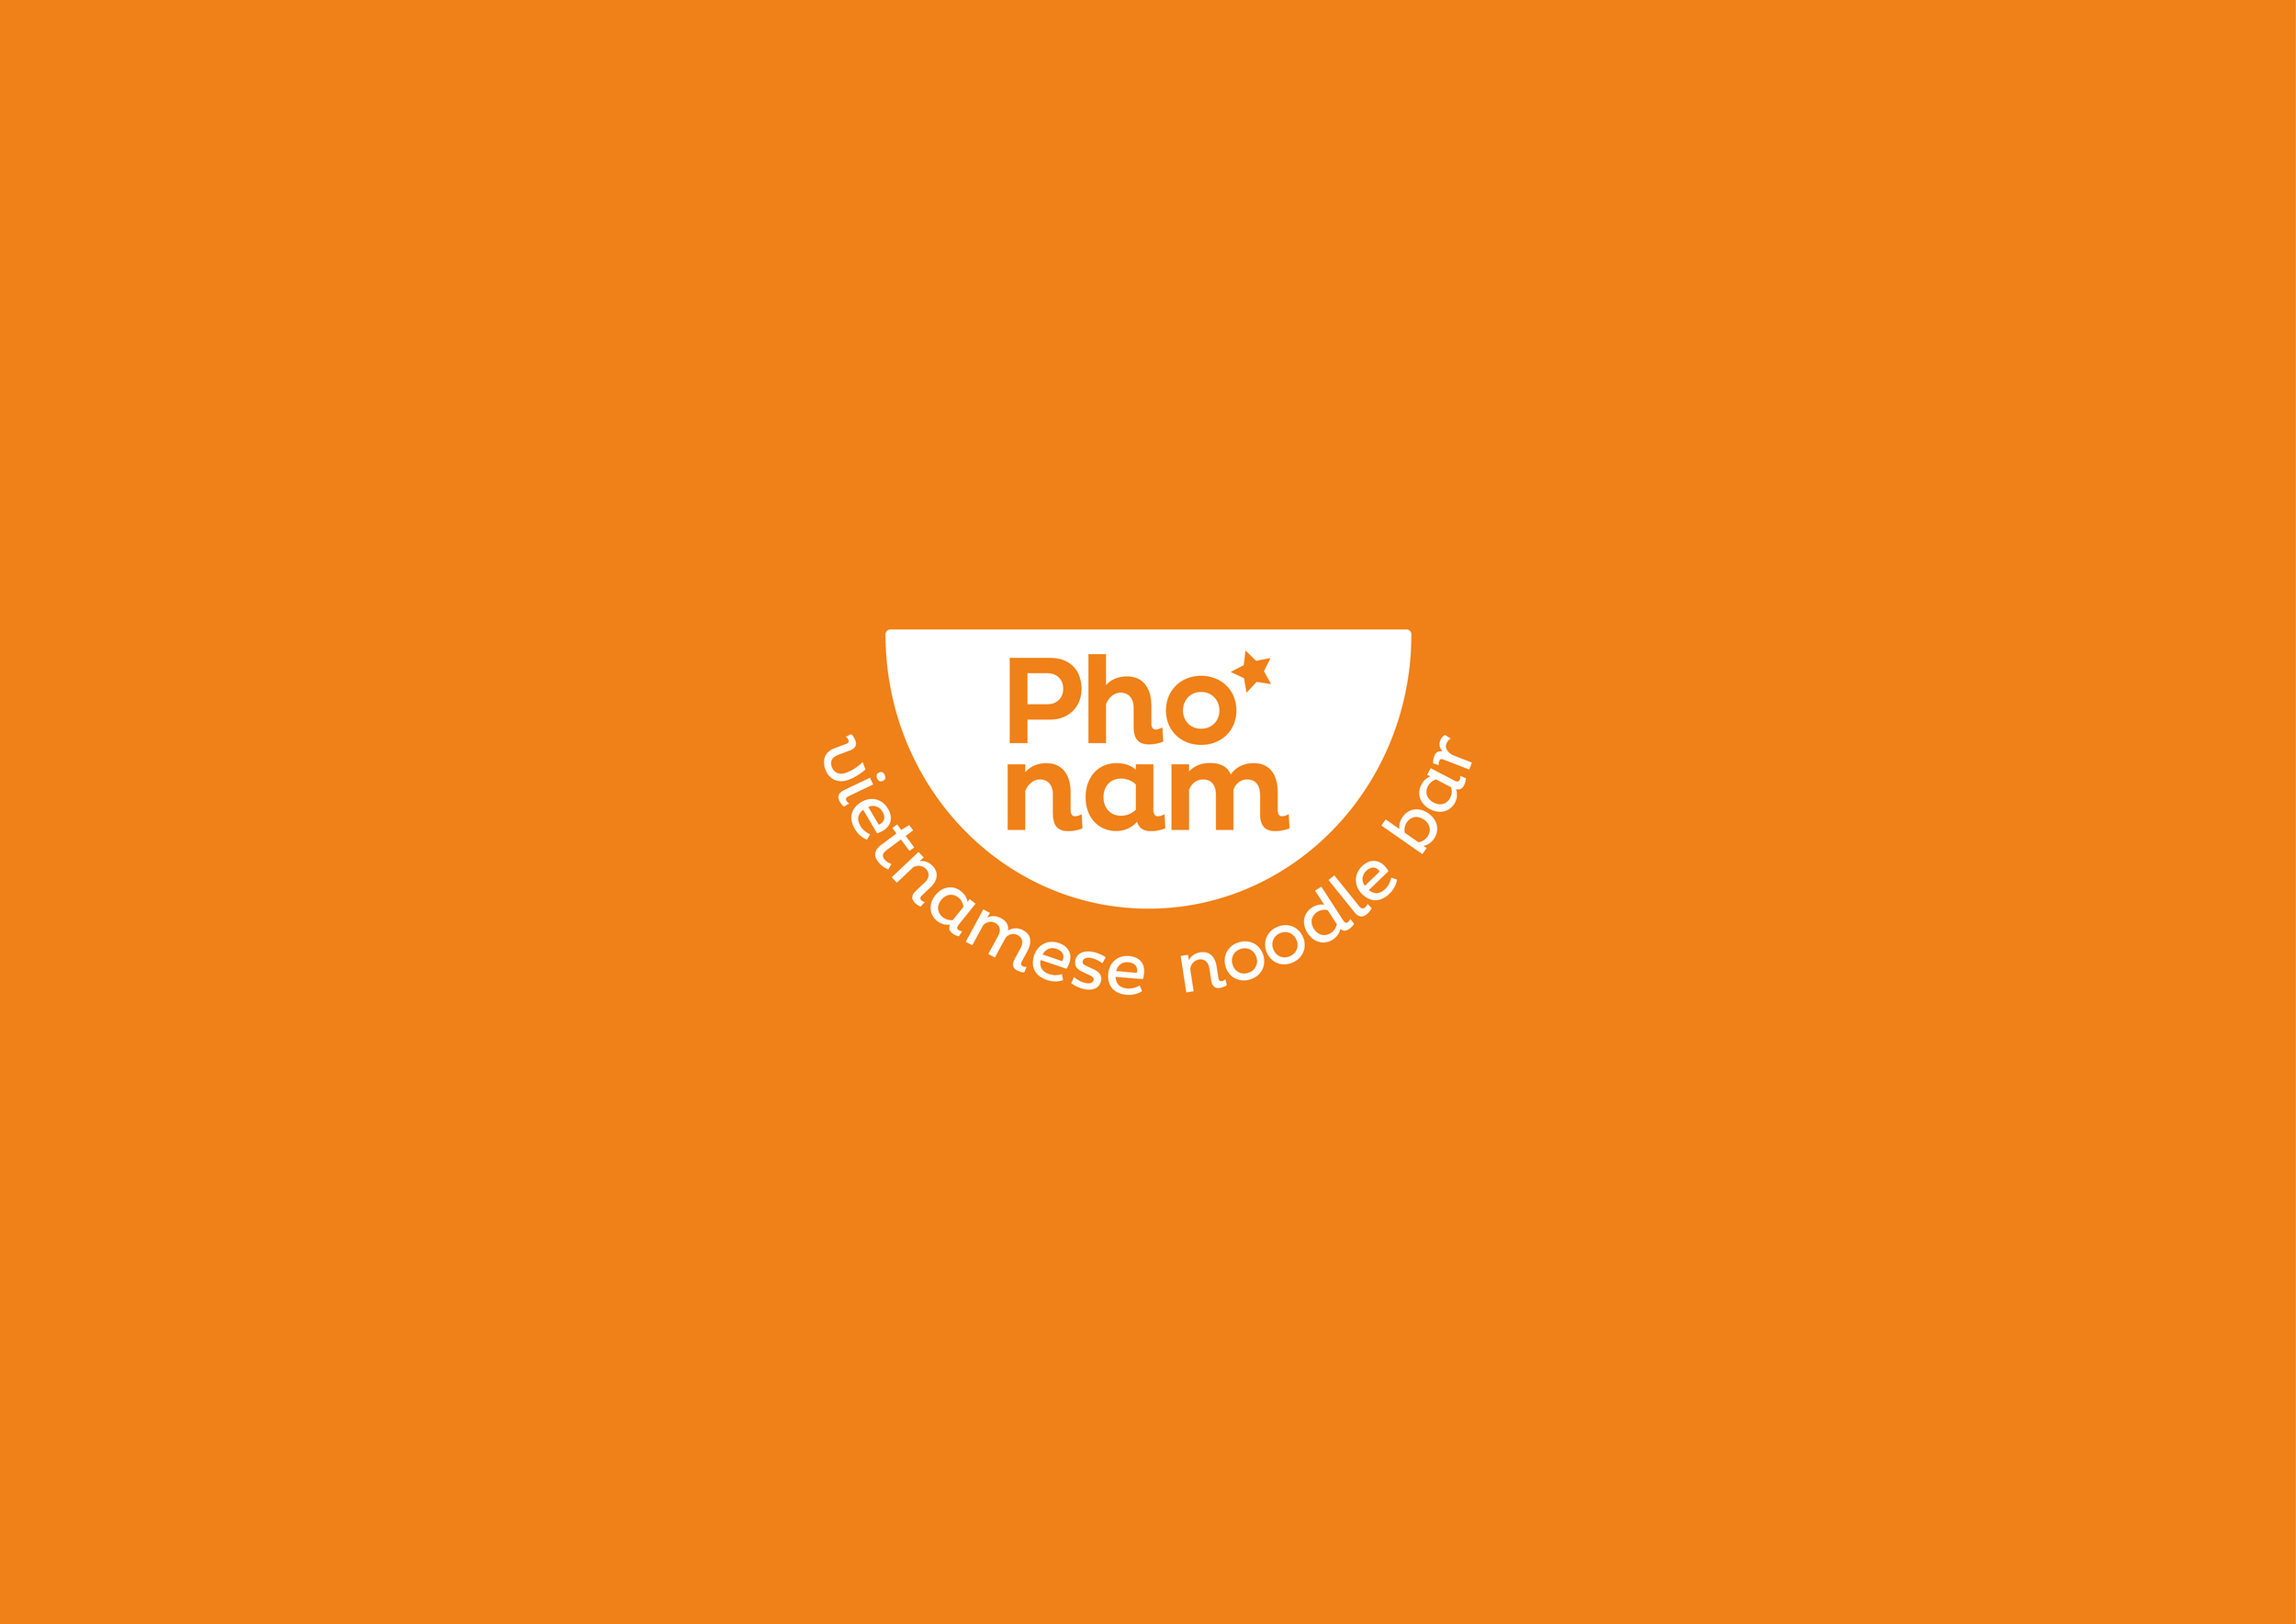 Graphic Design Company UK. Pho Nam brand logo in orange background